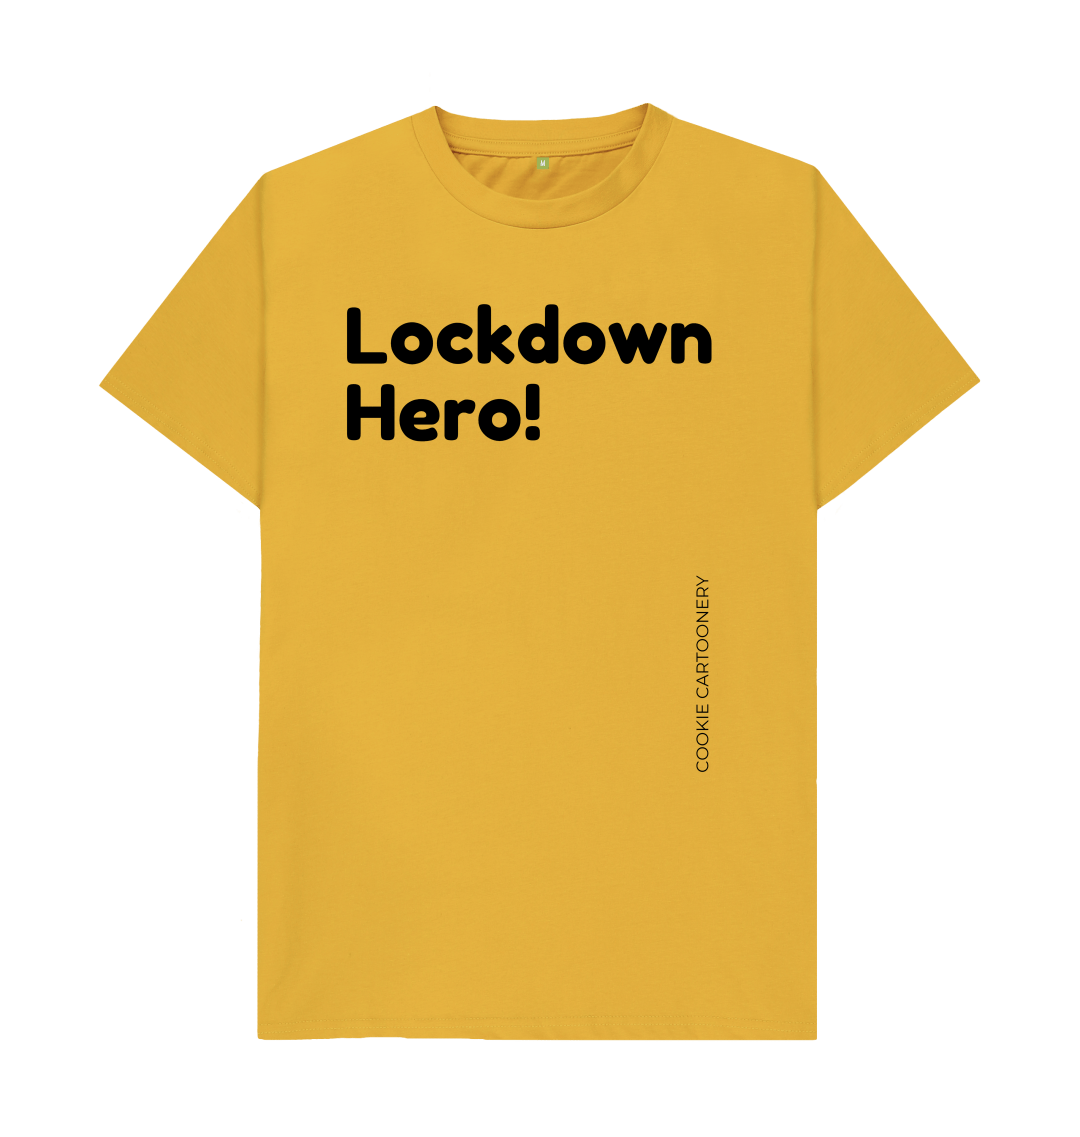 T Shirts For Men Funny Graphic Tee Lockdown Hero By Cookie Cartoonery Cookiecartooneryclothing